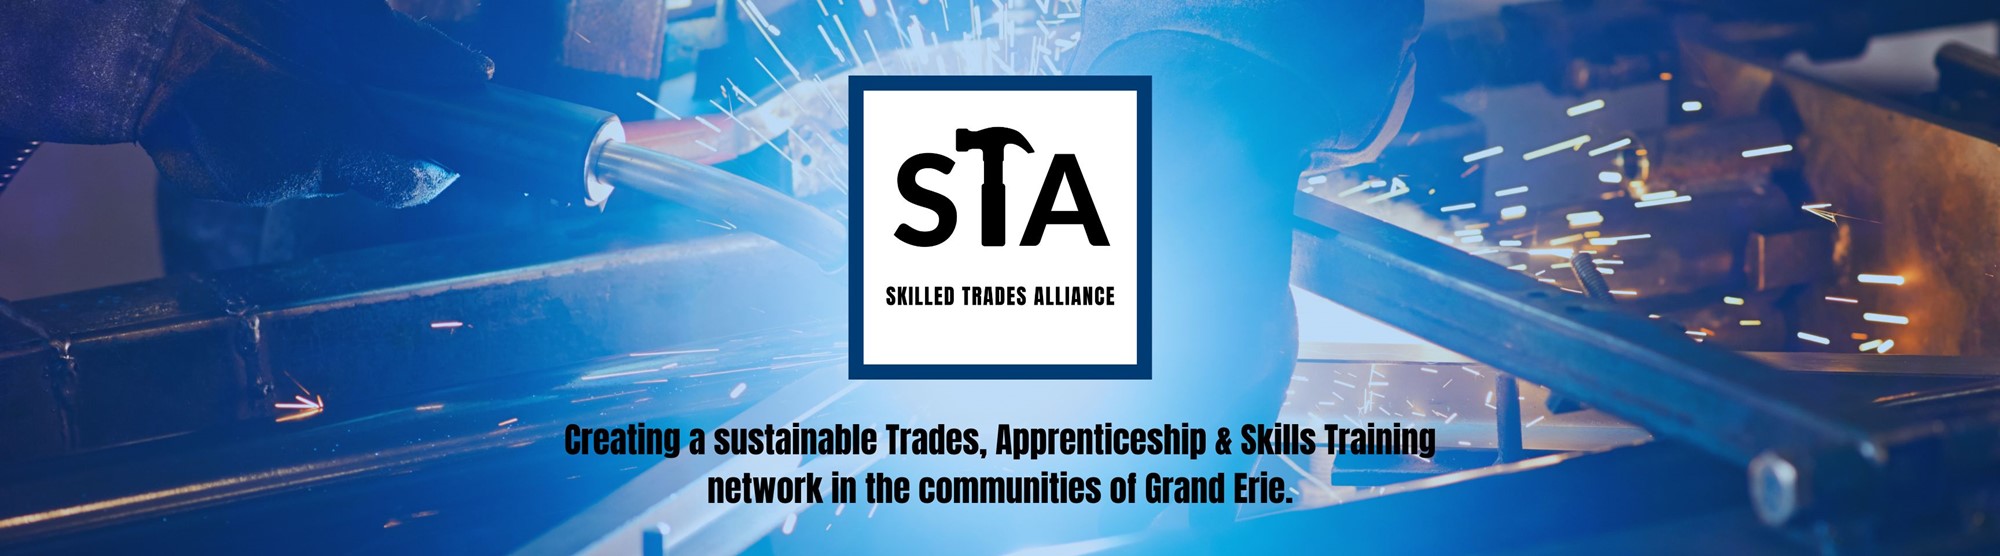 Skilled Trades Alliance banner